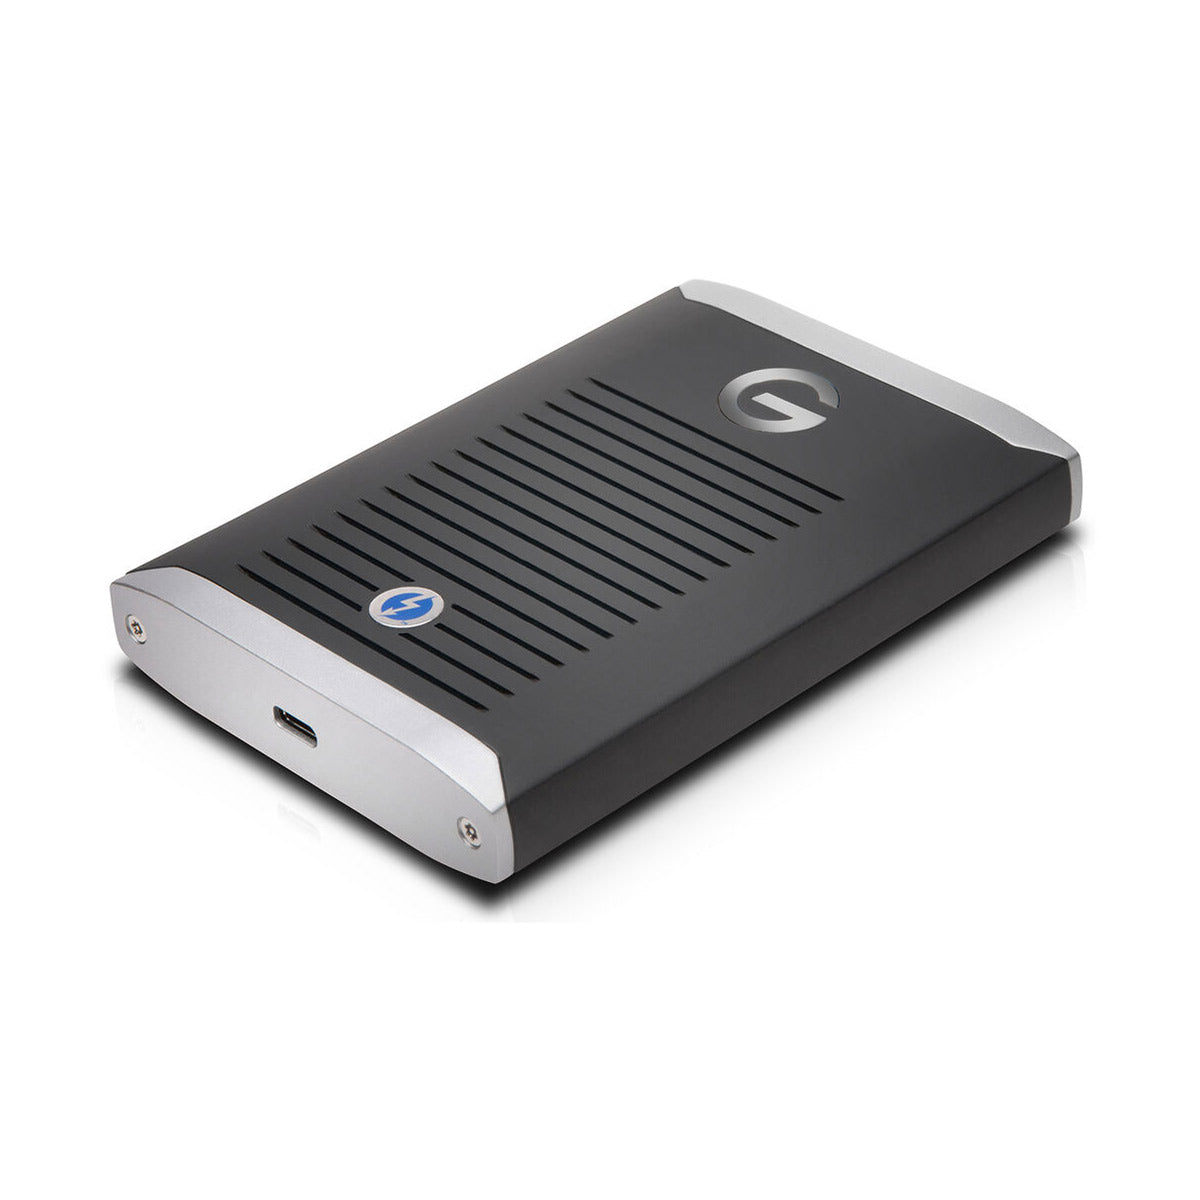 SanDisk Professional 1TB G-Drive PRO SSD Thunderbolt 3 External Drive